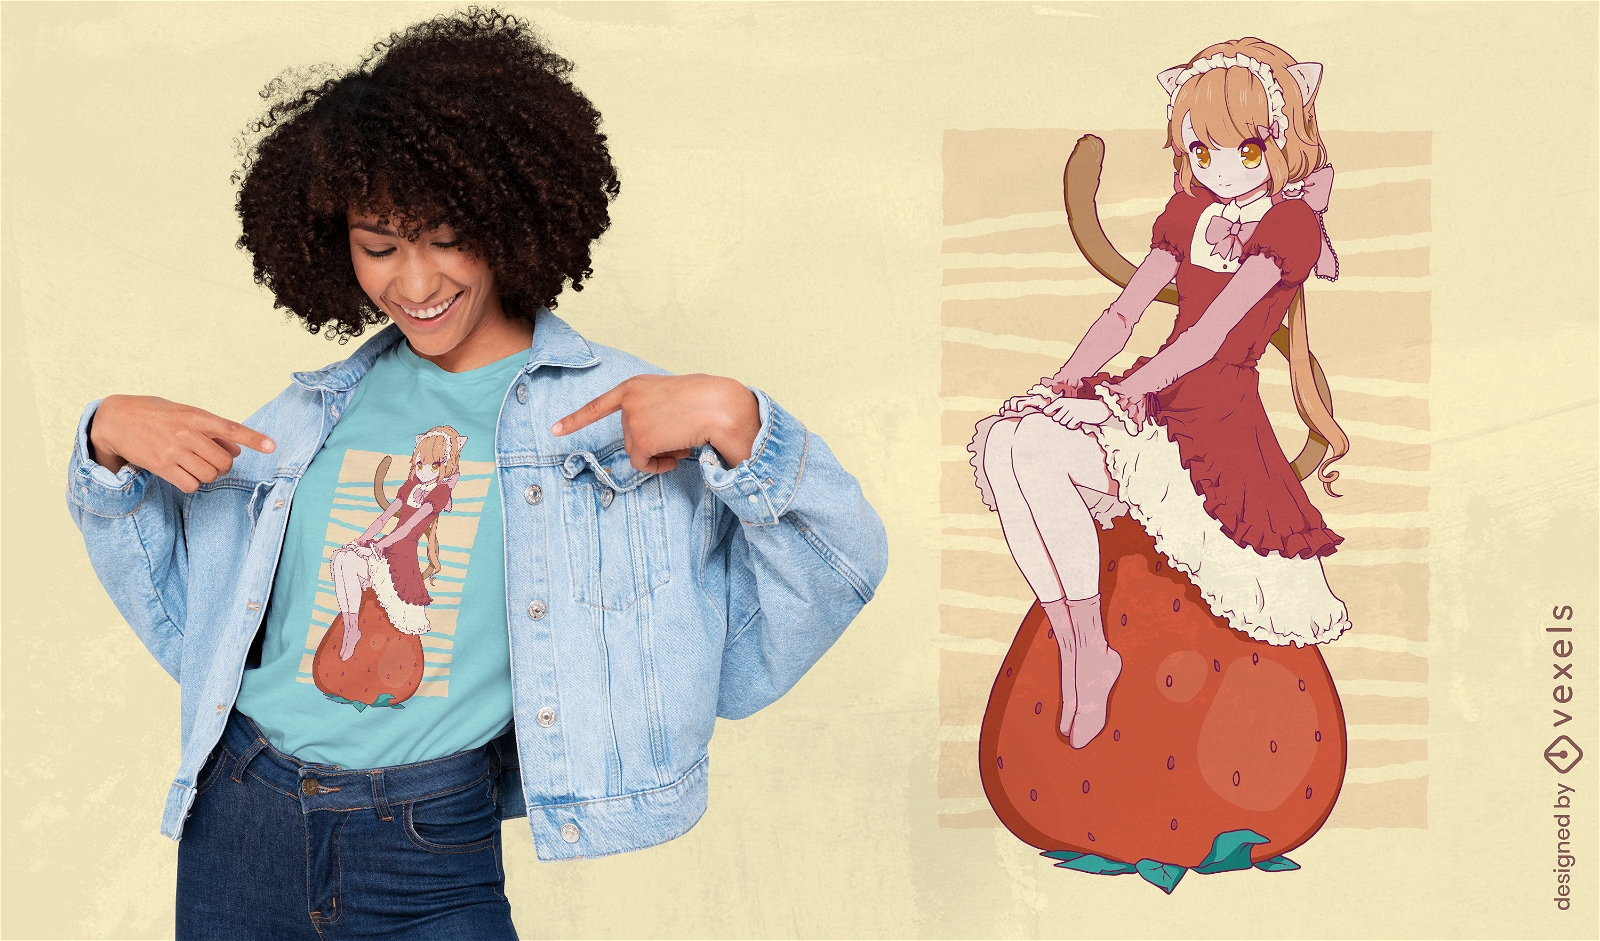 Anime cat girl en diseño de camiseta de fresa